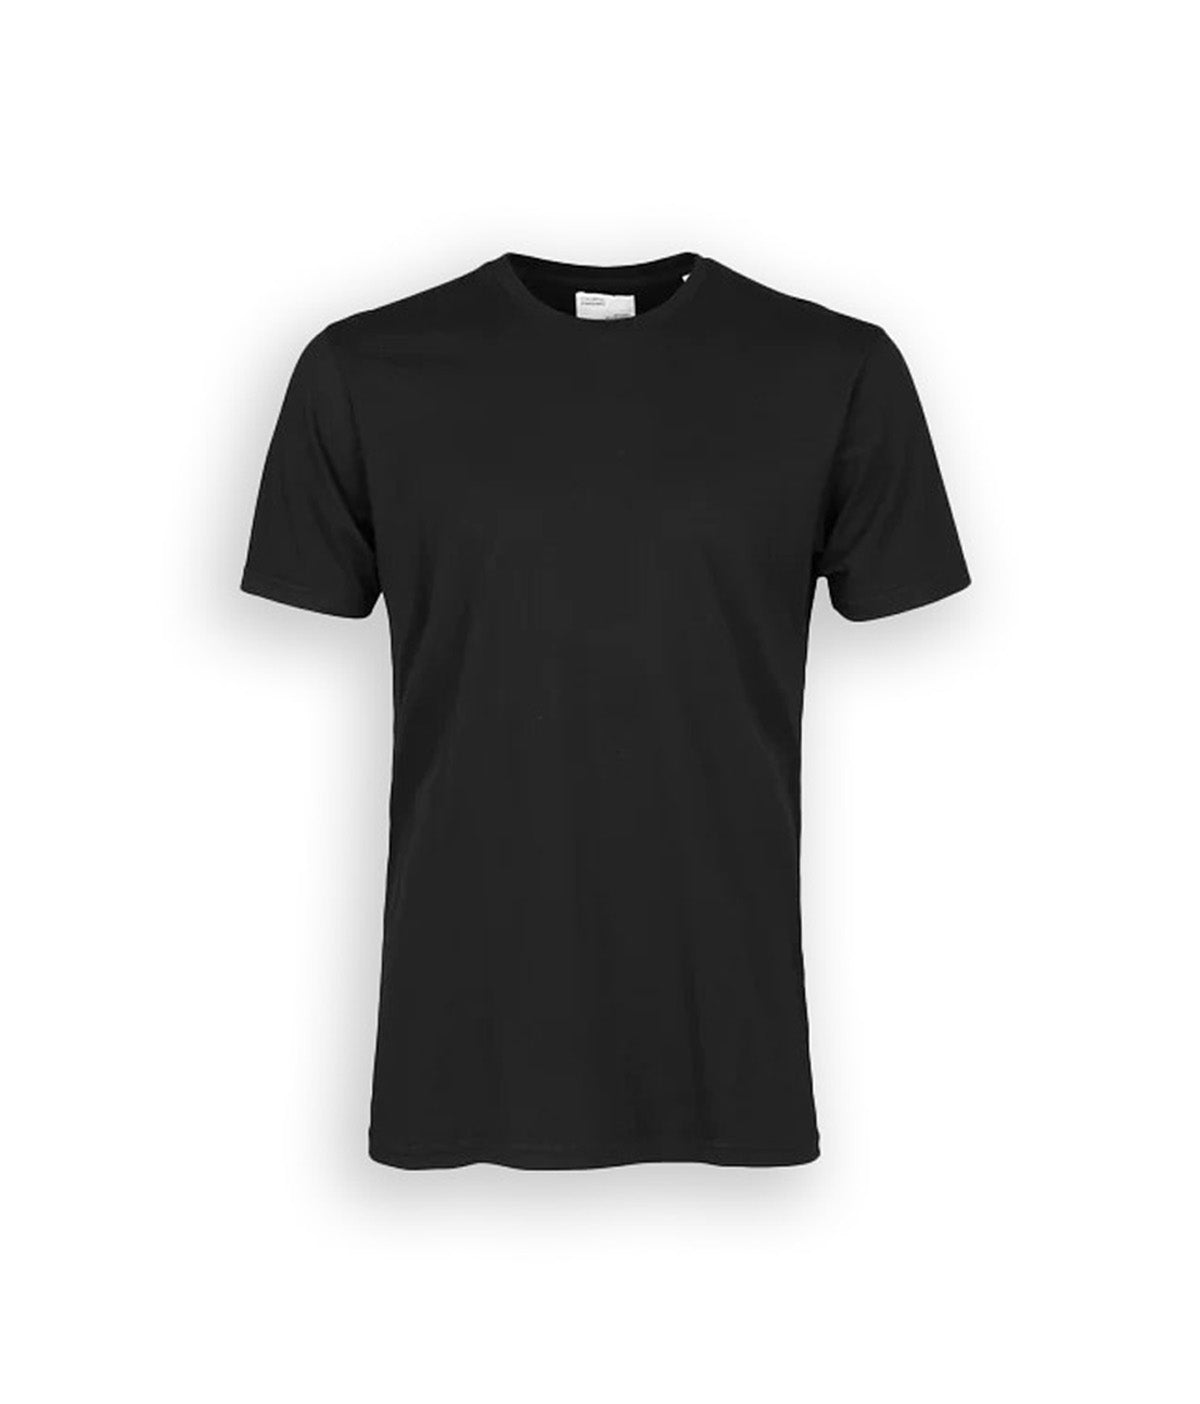 Colorful Standard T-Shirt Black Organic Cotton Unisex